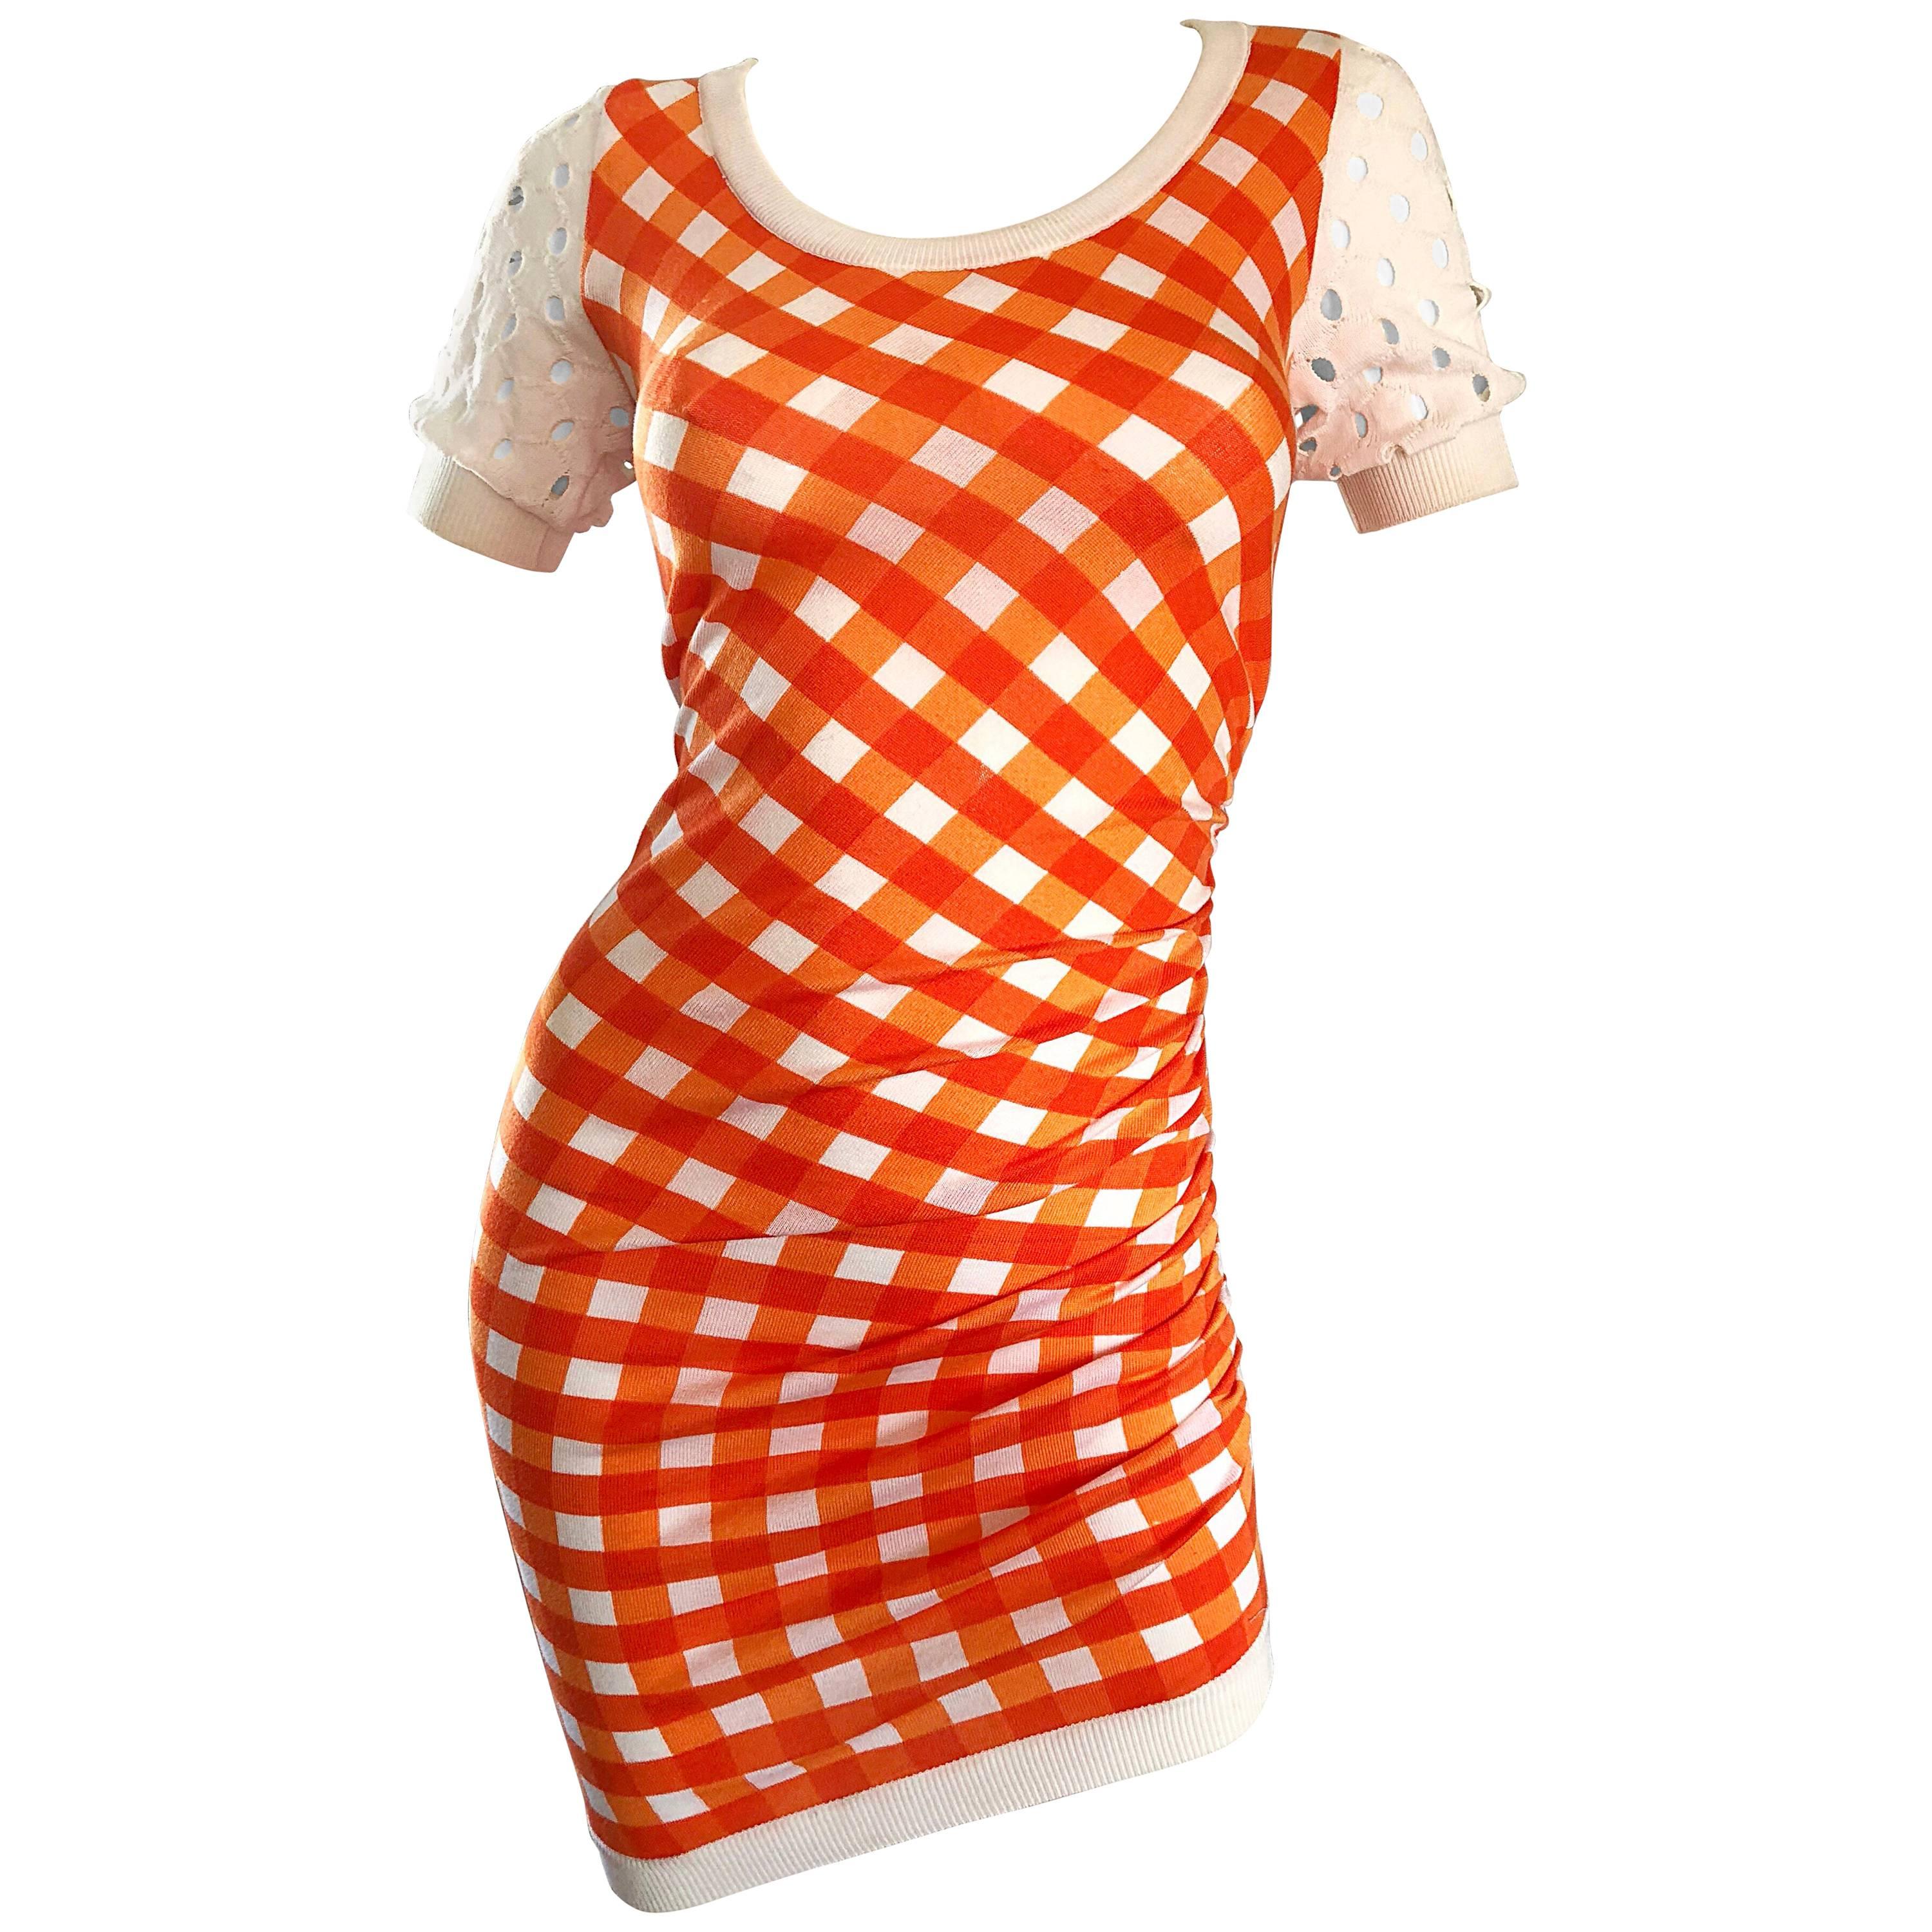 Vintage Moschino Cheap & Chic 1990s Orange + White Gingham Bodycon 90s Dress